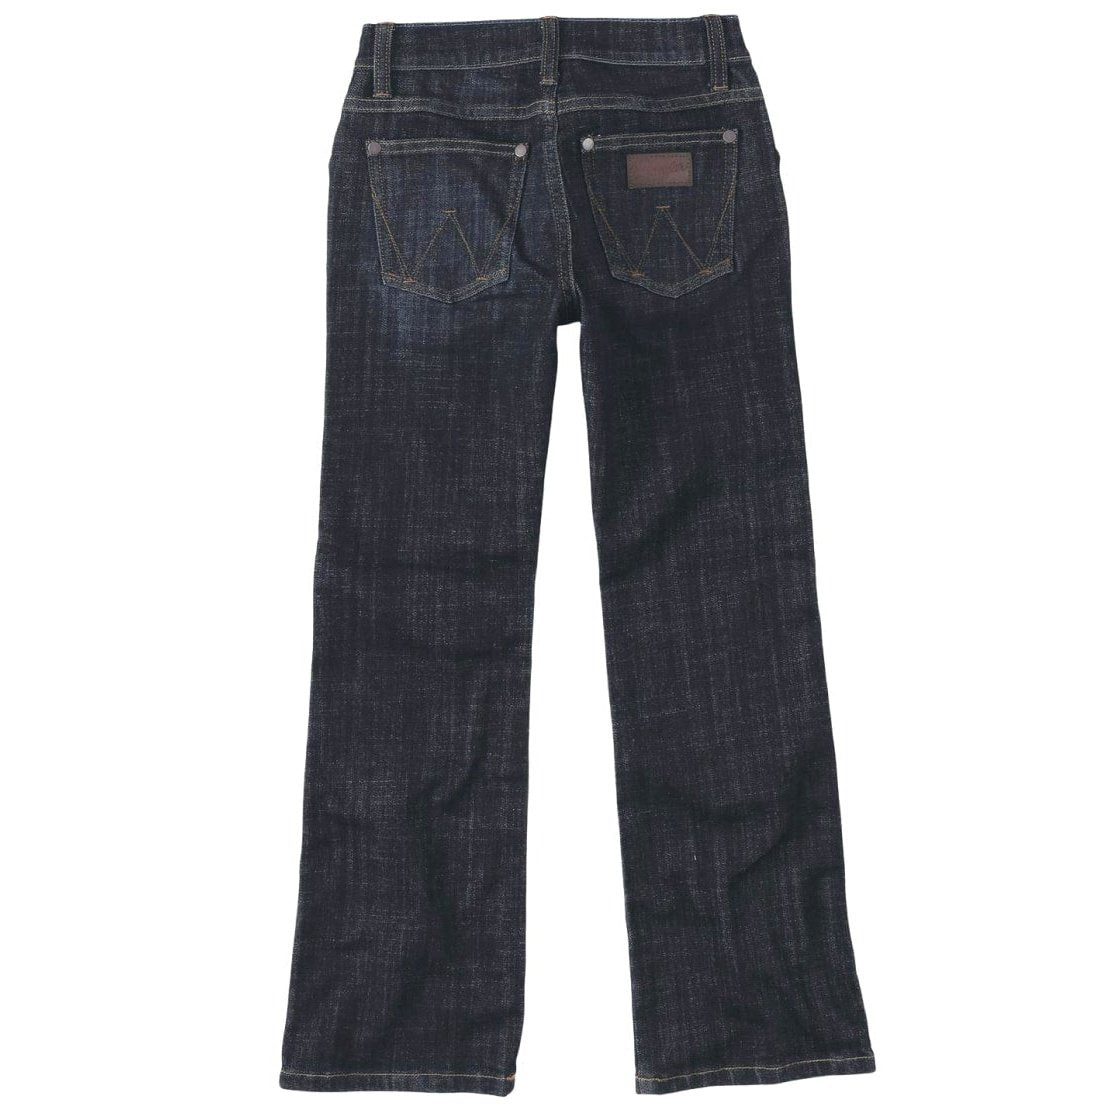 Wrangler Boy’s Jeans Retro Stretch Slim Boot Cut Dax 112336146 - Wrangler